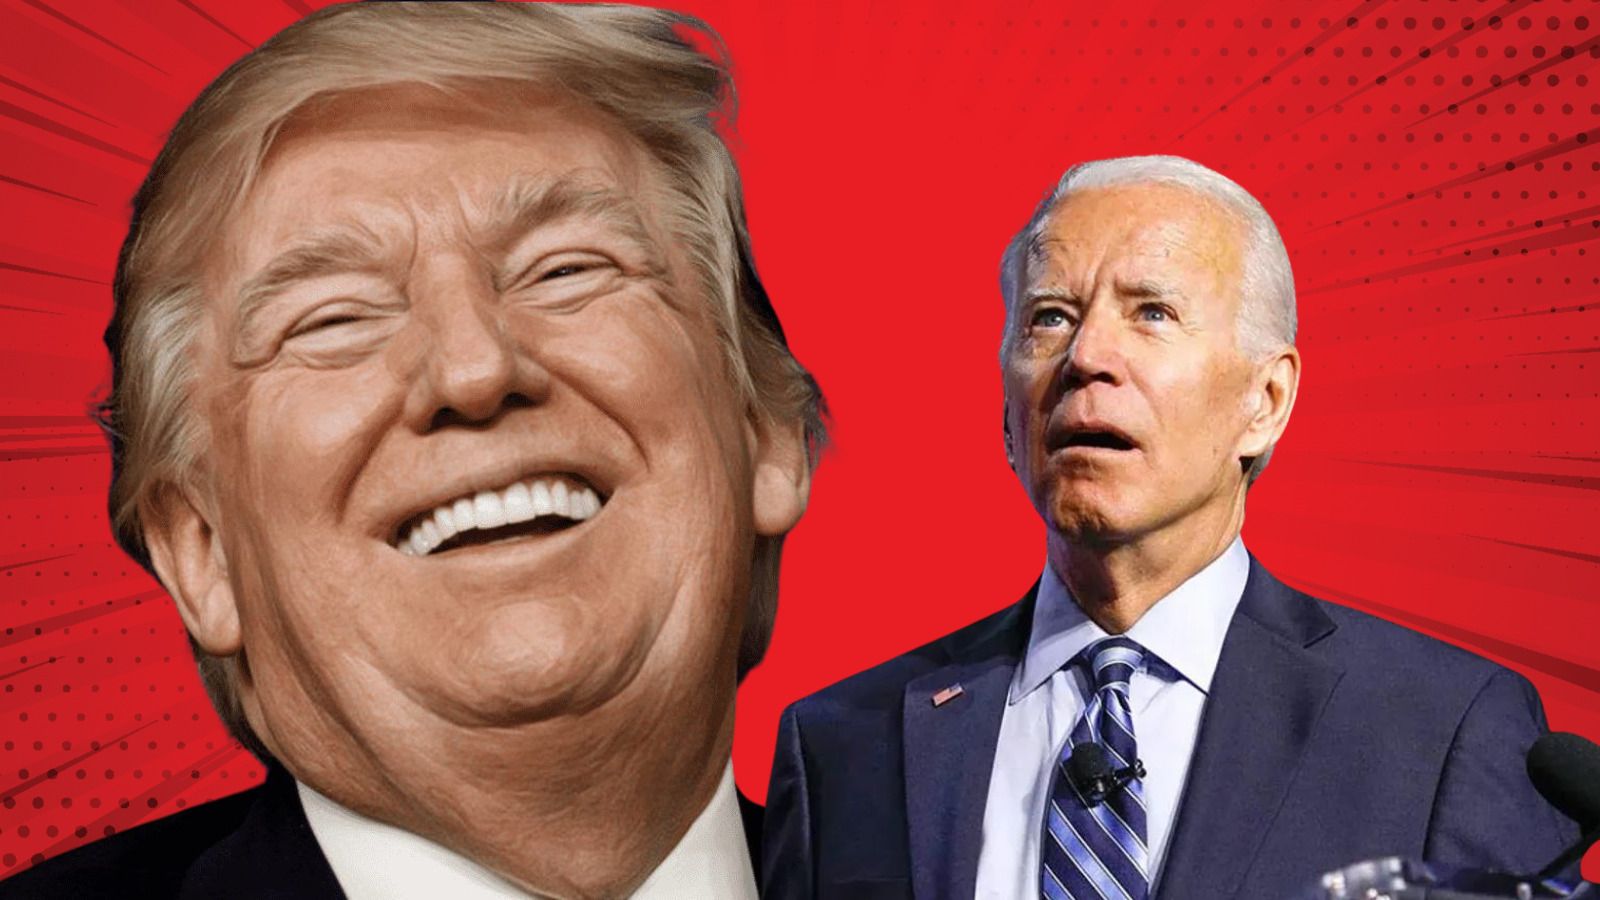 NEW POLL: President Trump Beating Joe Biden In Surprising Far-Left Democrat State